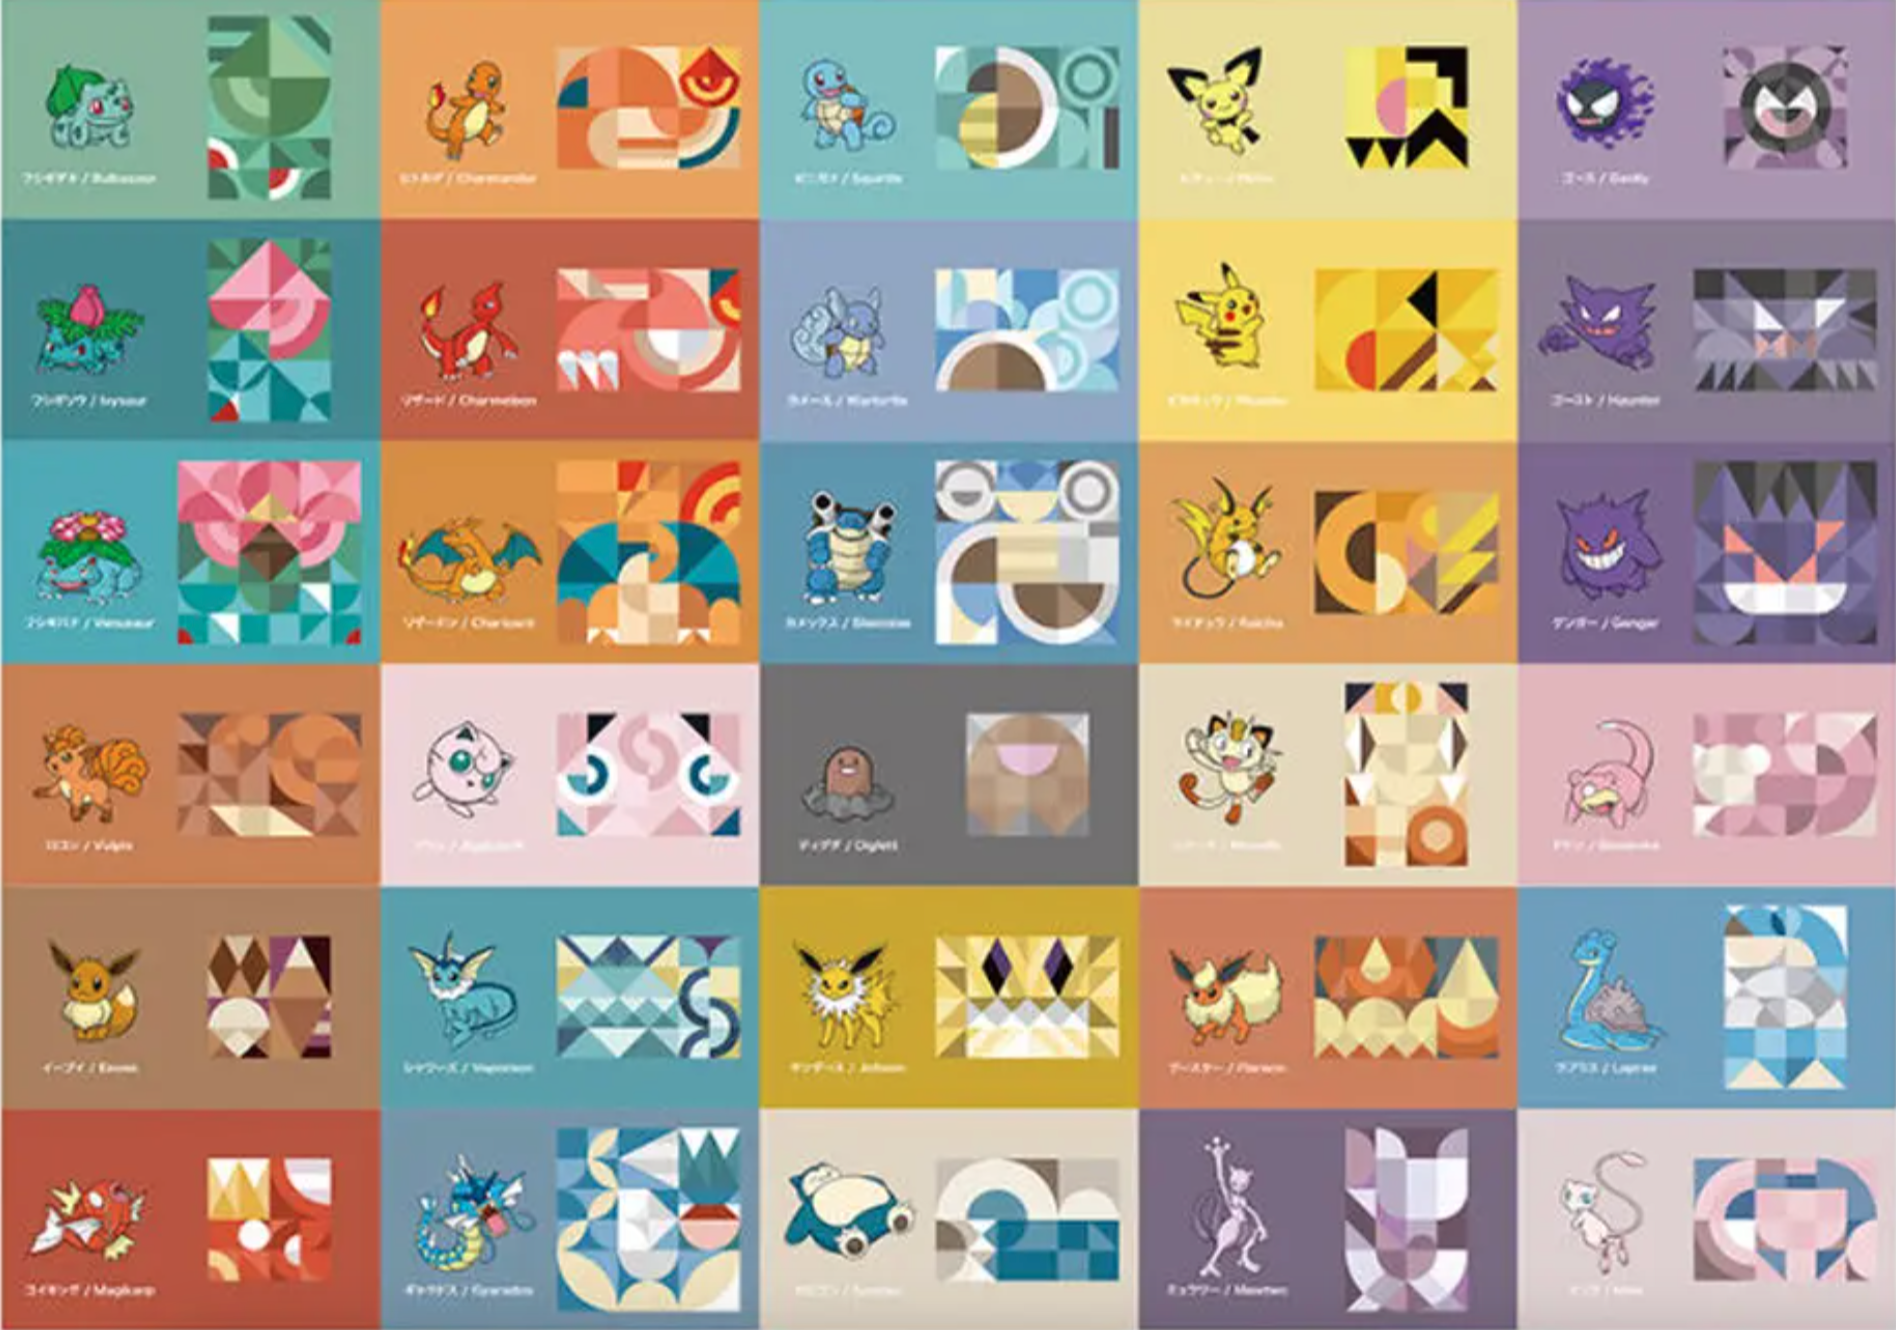 Example mosaics for 30 different Gen I Pokémon